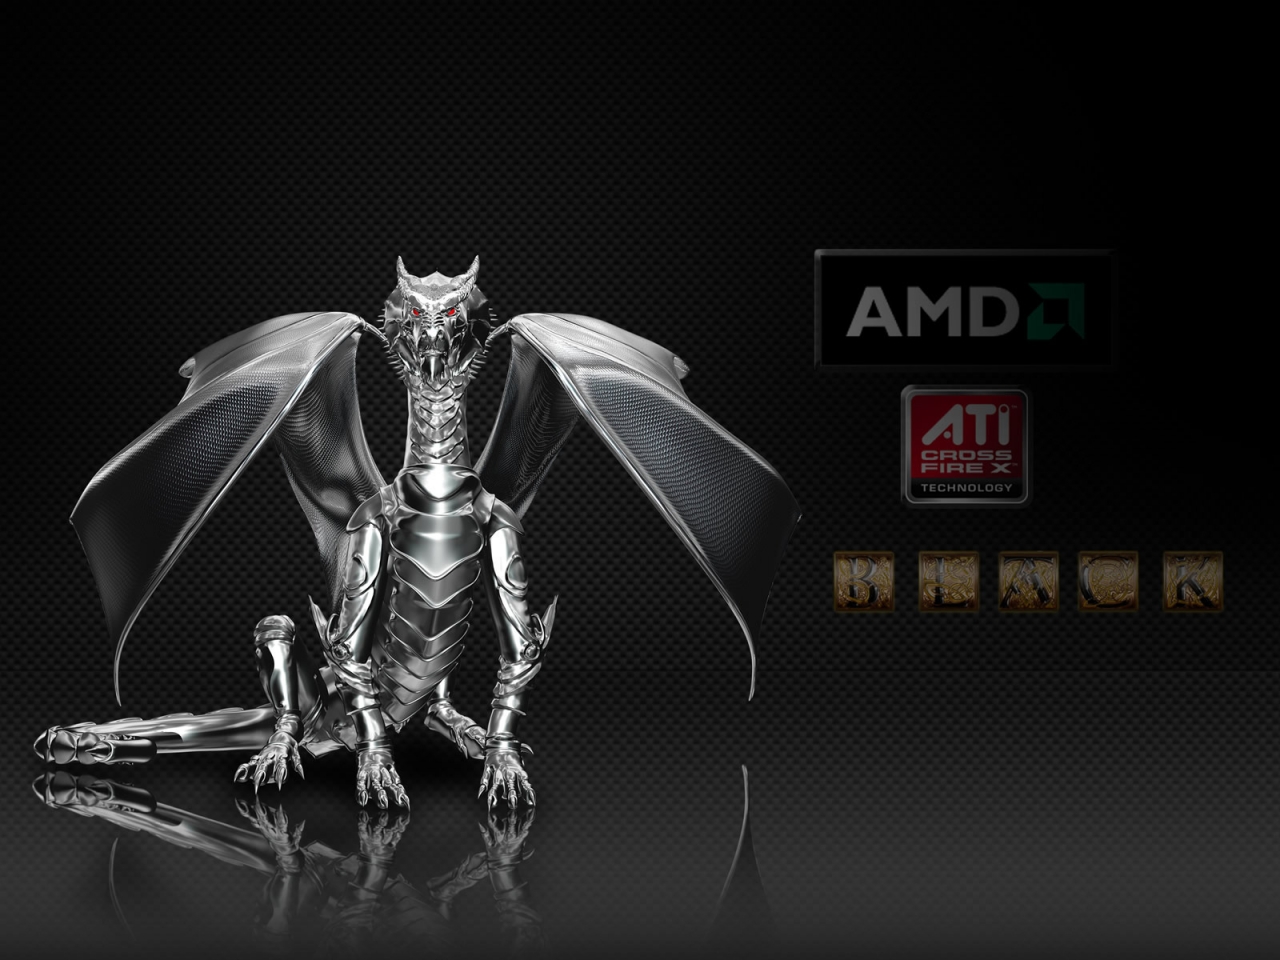 AMD Dragon Black for 1280 x 960 resolution